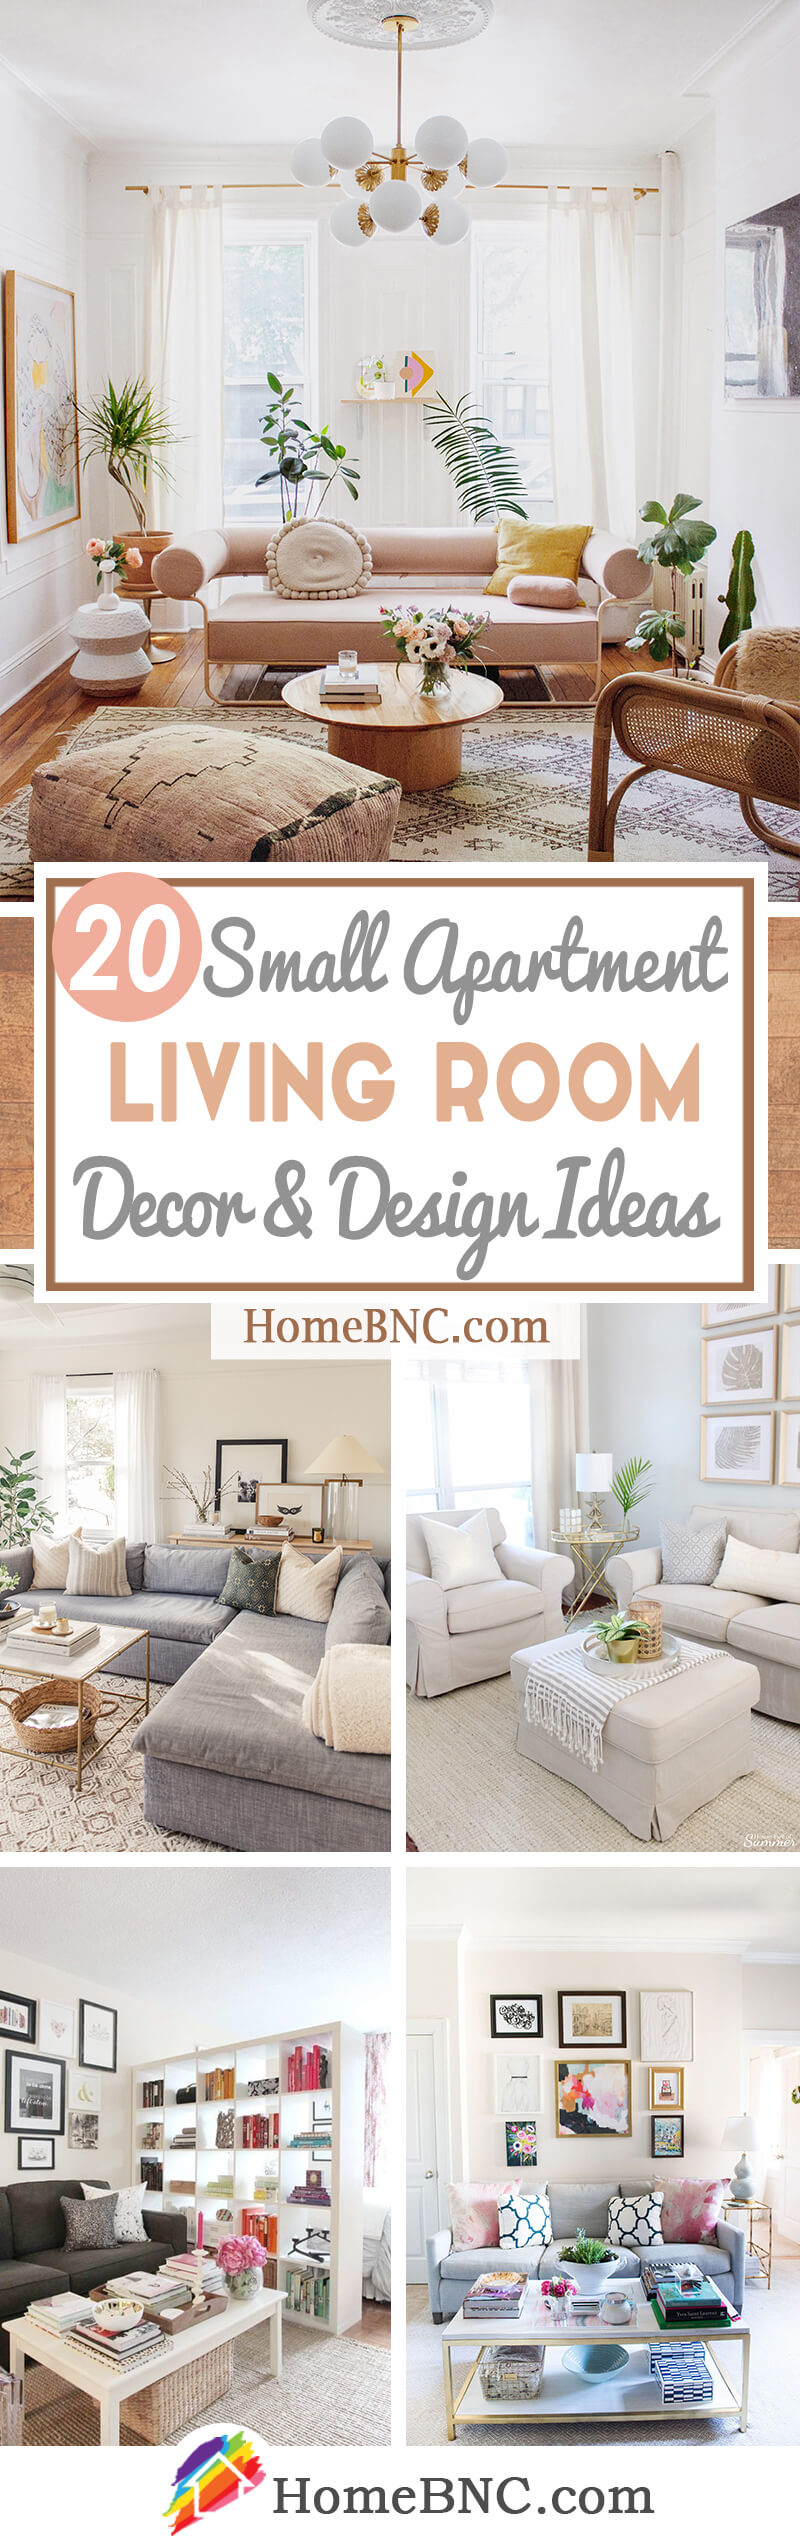 Small Apartment Living Room Decor, Design Small Living Room Apartment